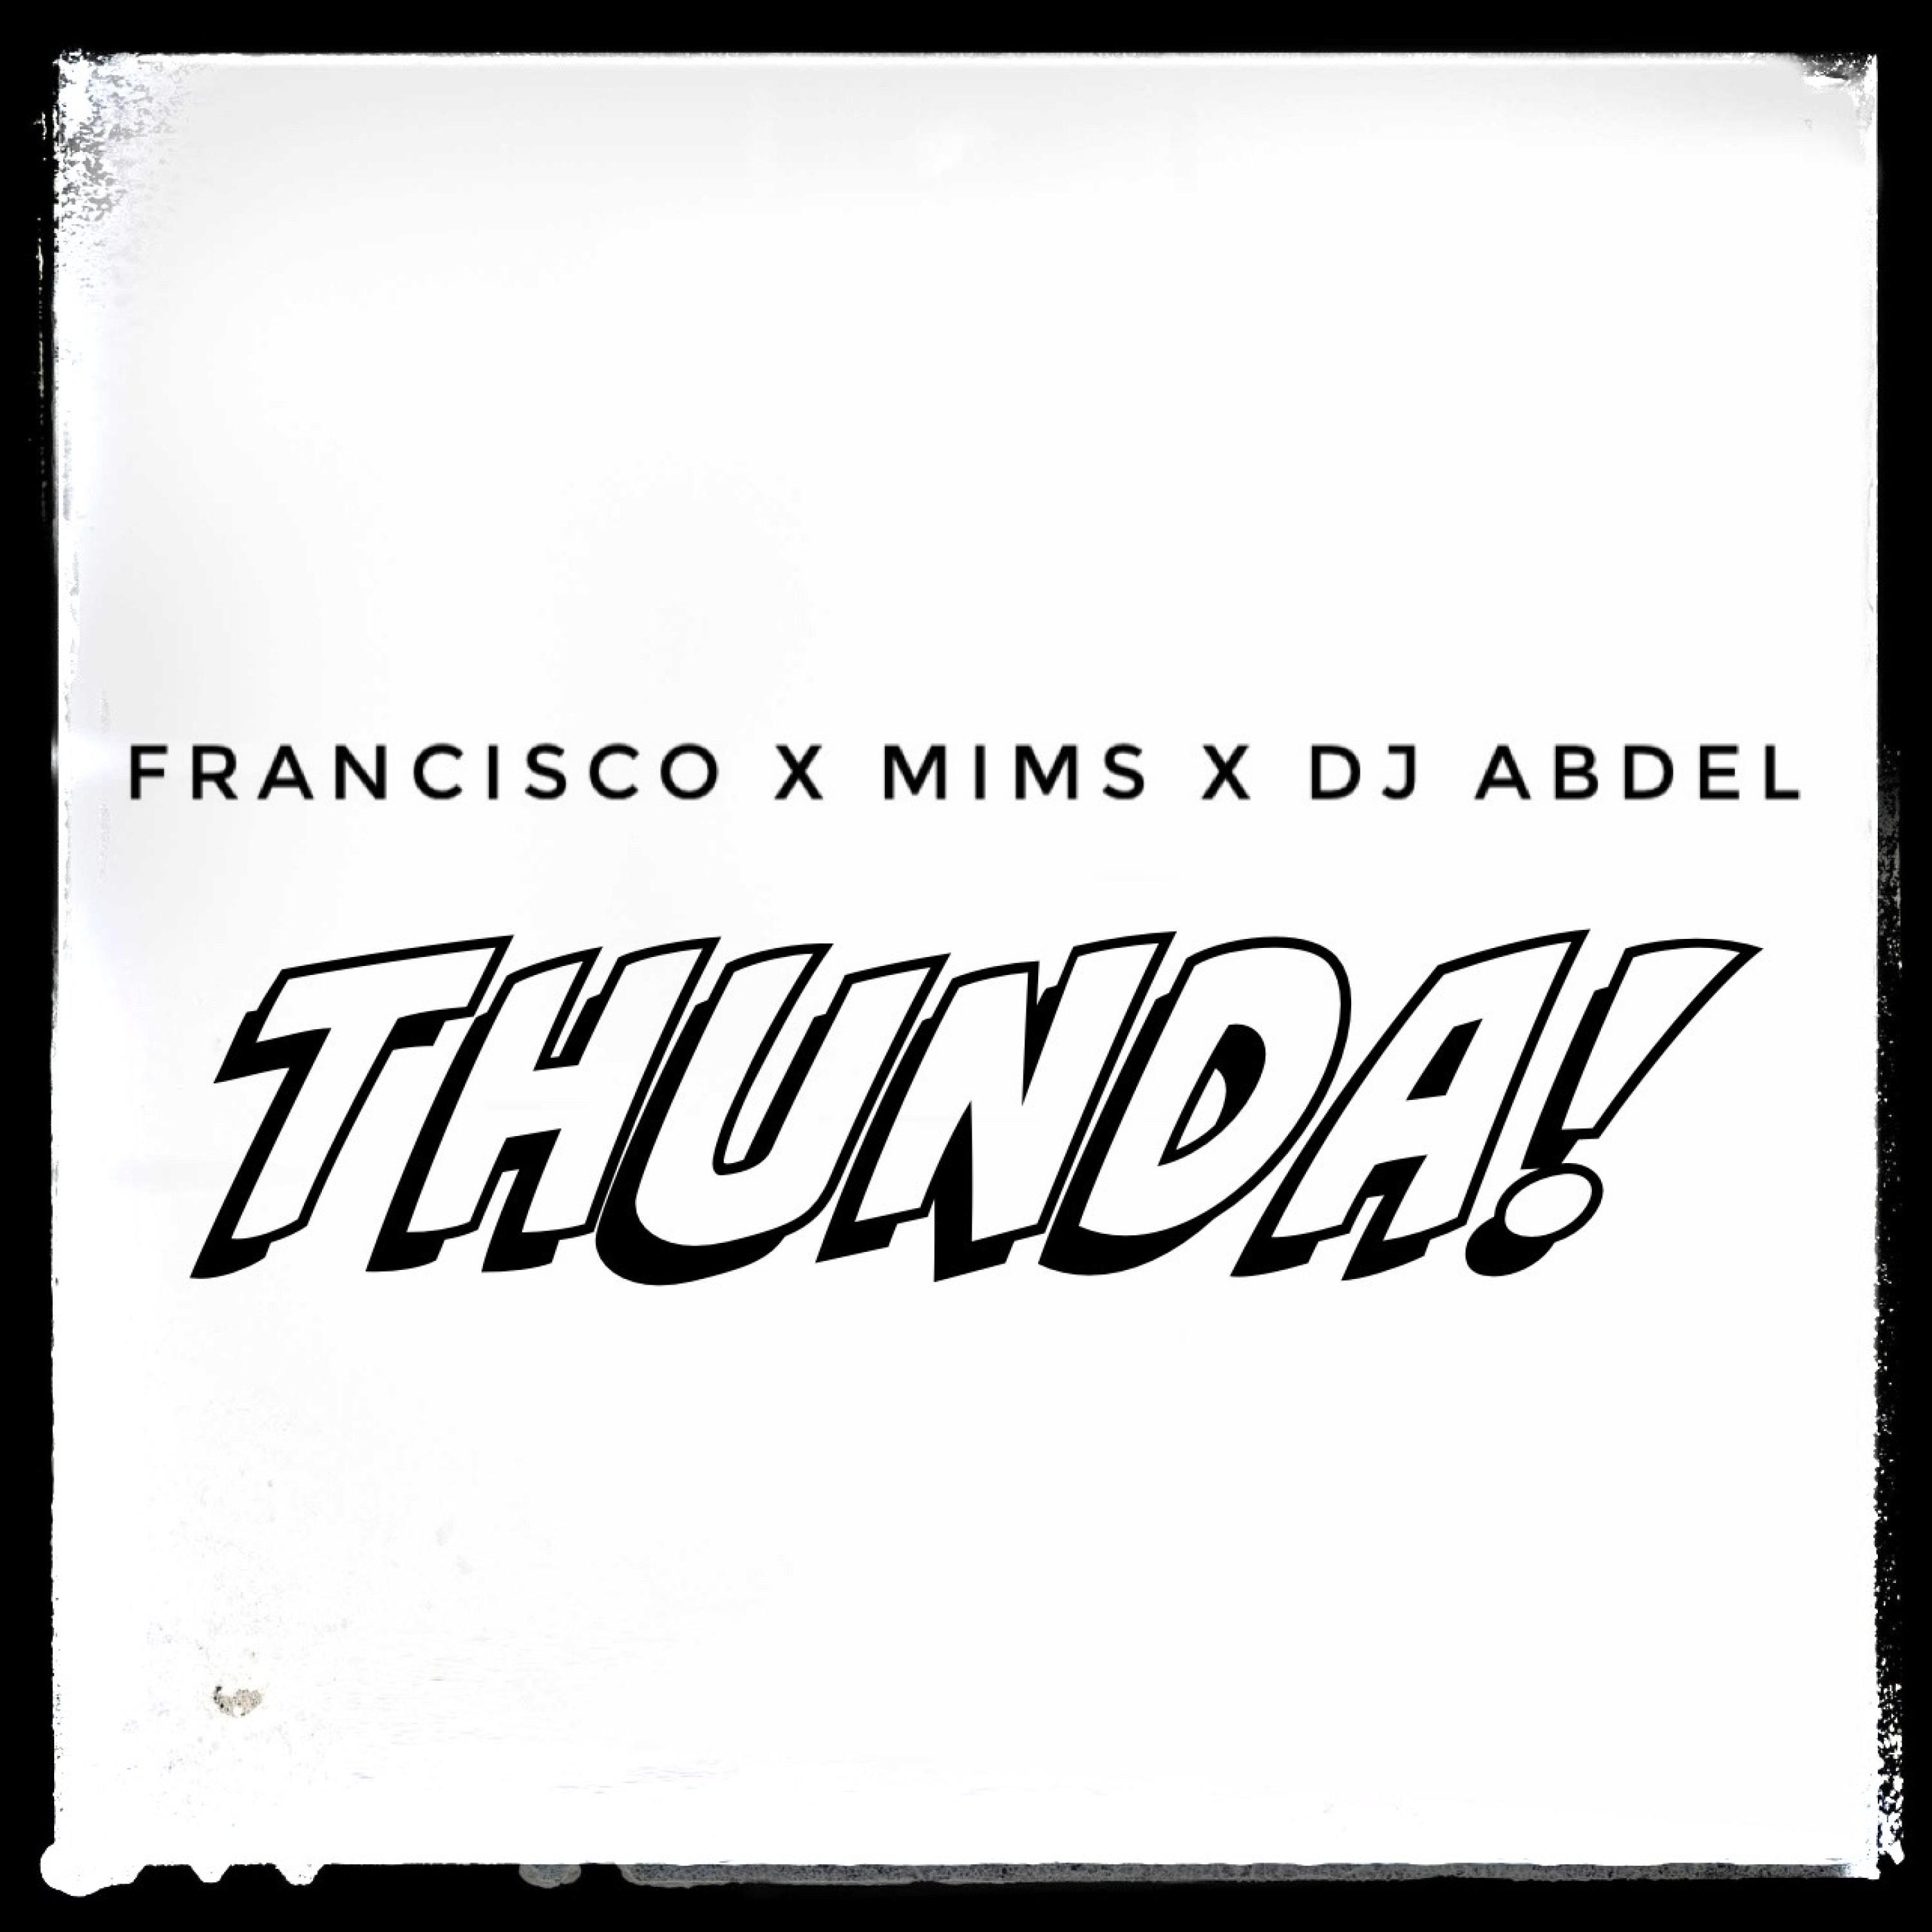 Francisco - Thunda! (DJ Abdel Mix) (Clean Version)